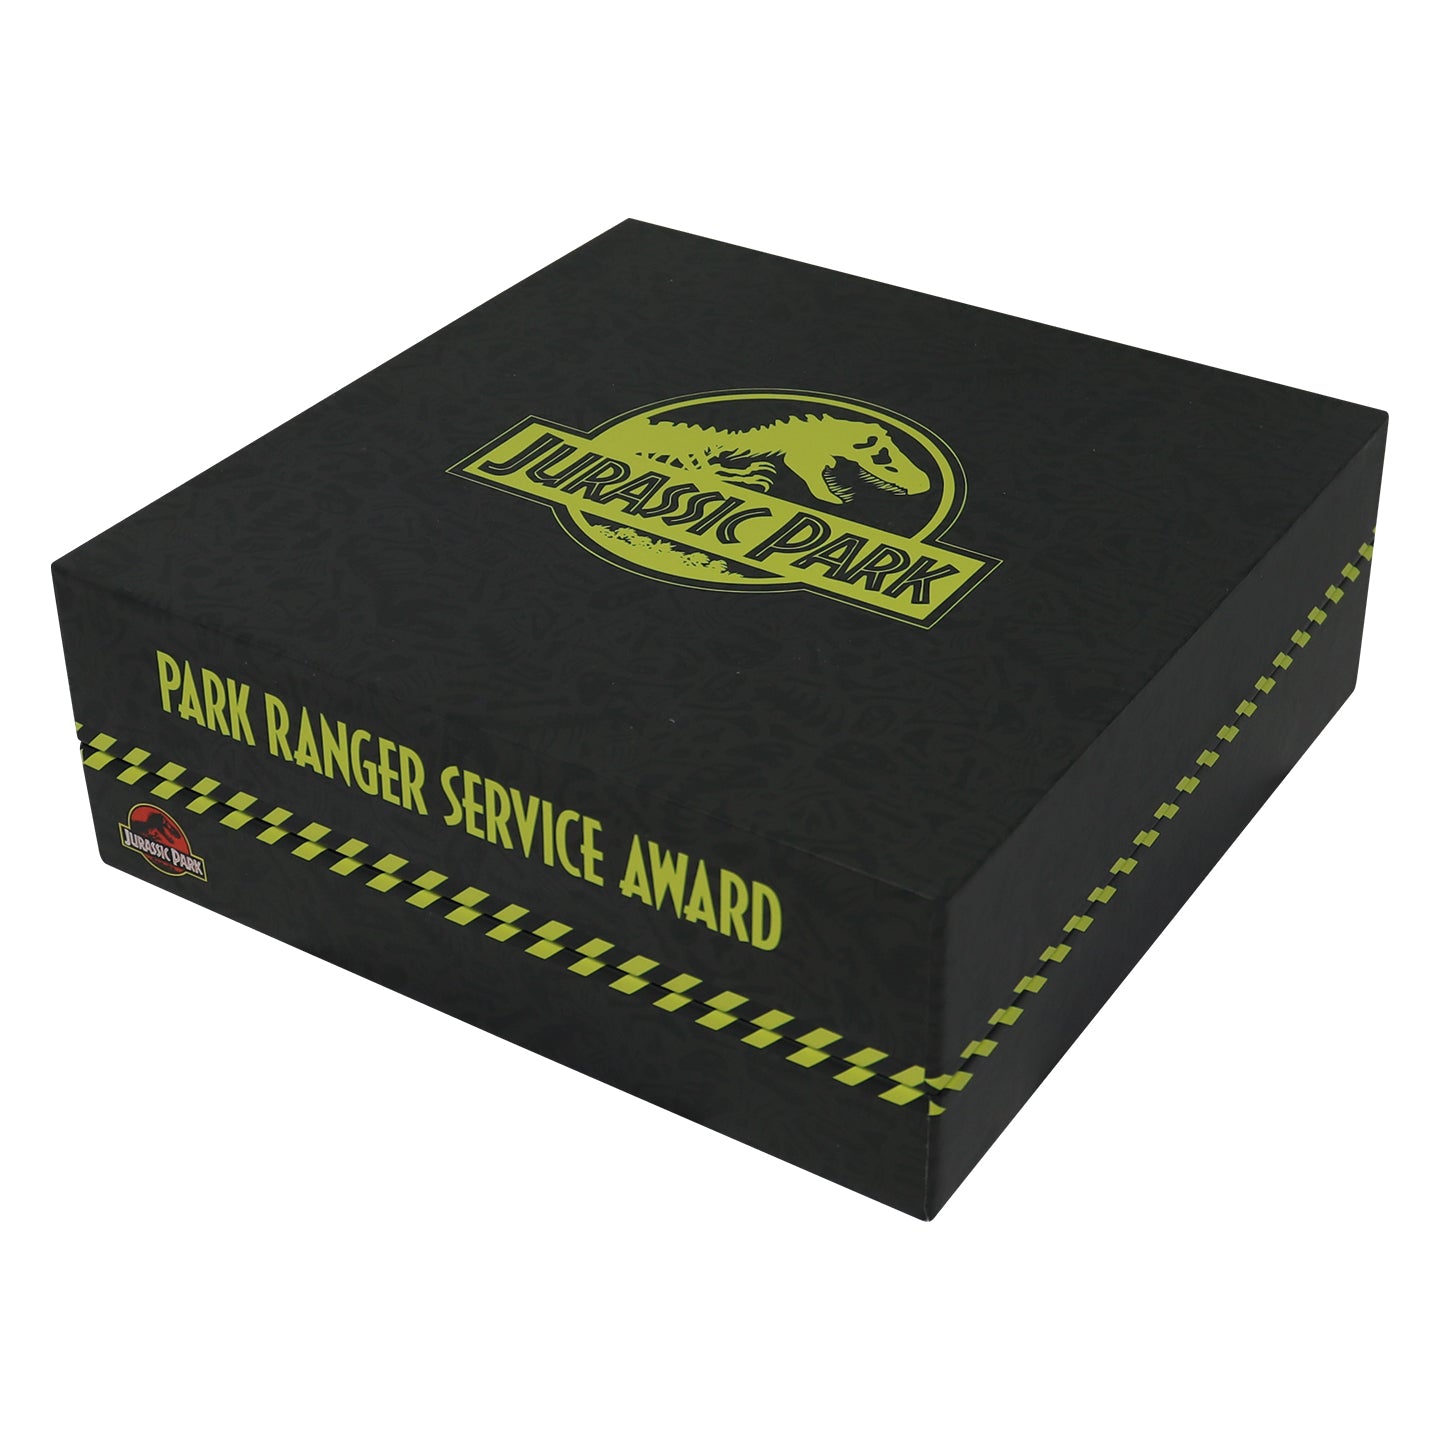 Jurassic Park 'Park Ranger Service Award'